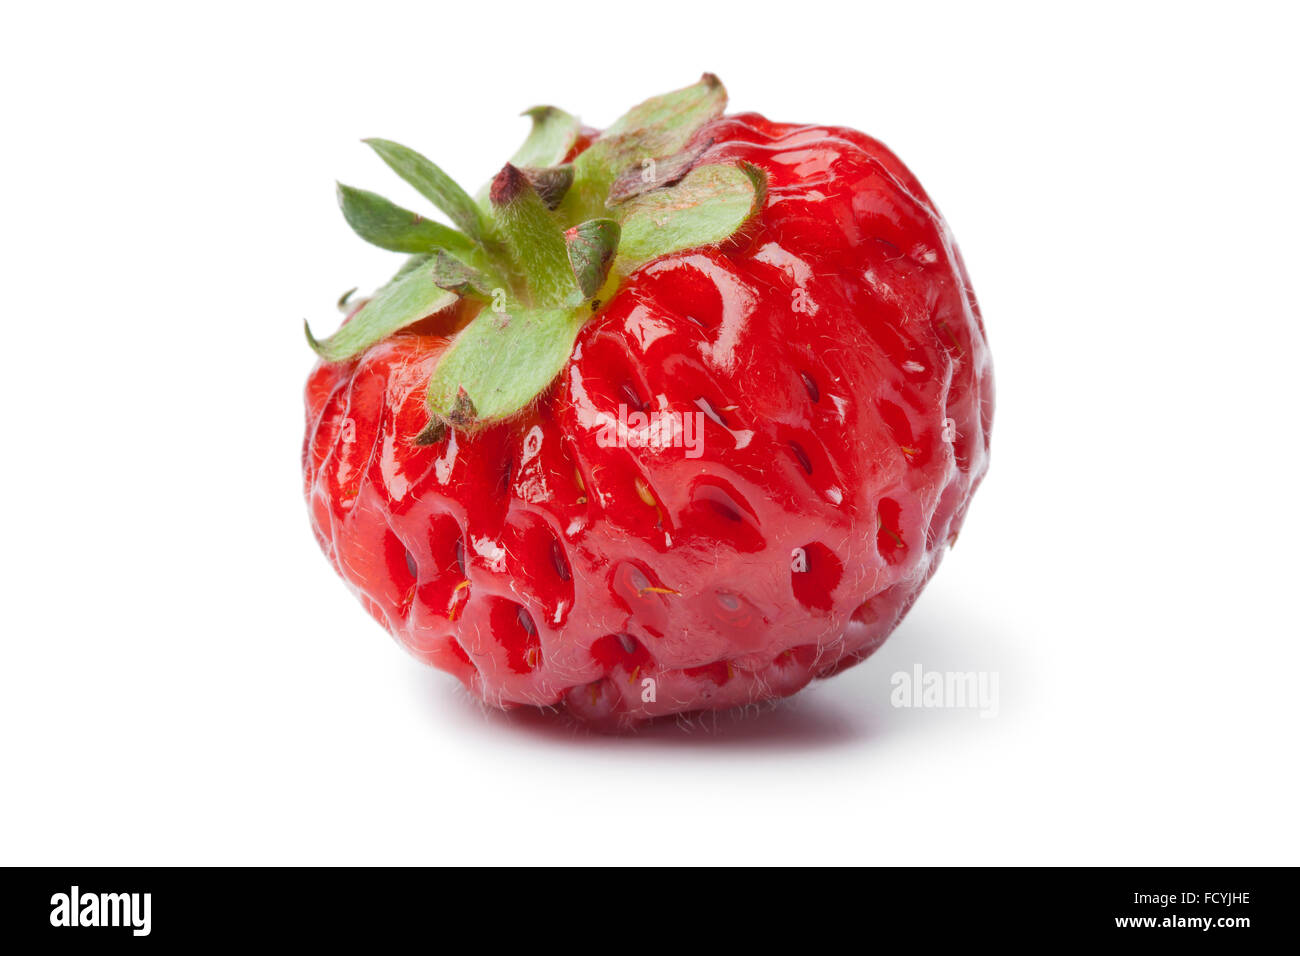 Single fresh ripe strasberry on white background Stock Photo